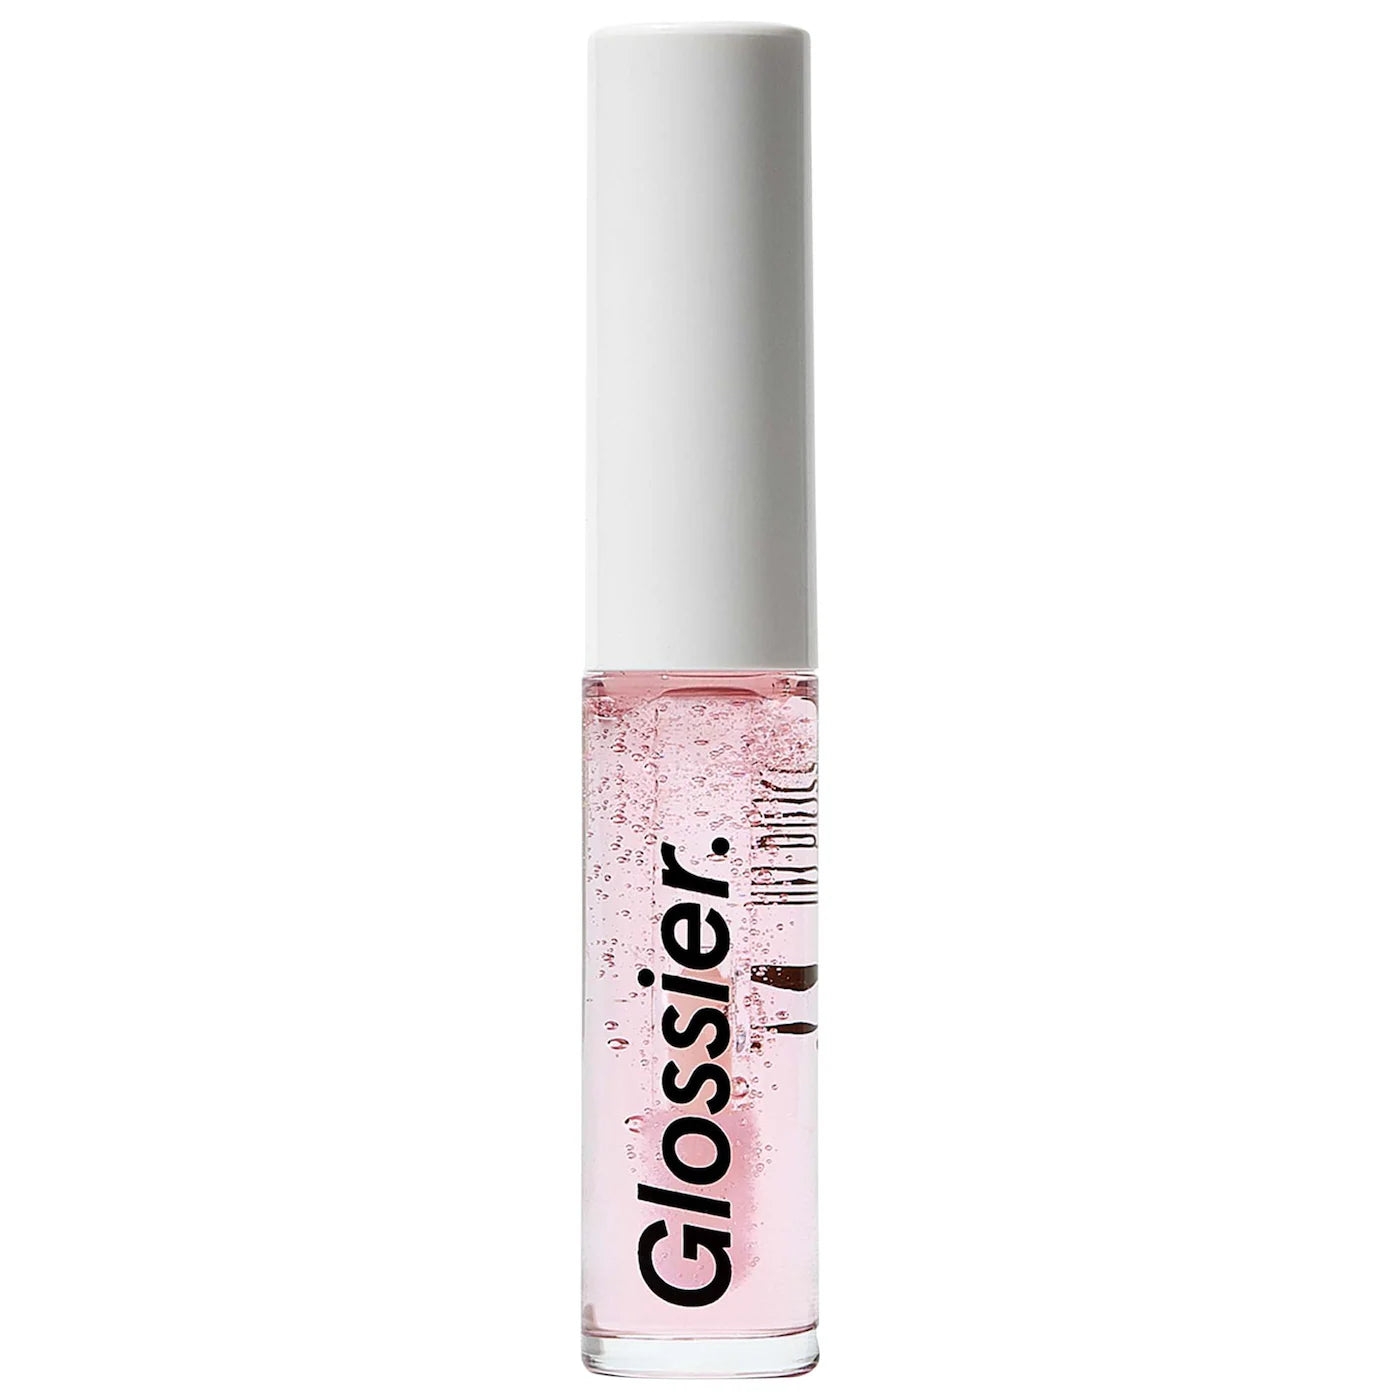 Glossybounce™ High-Shine Hydrating Lip Gloss Oil